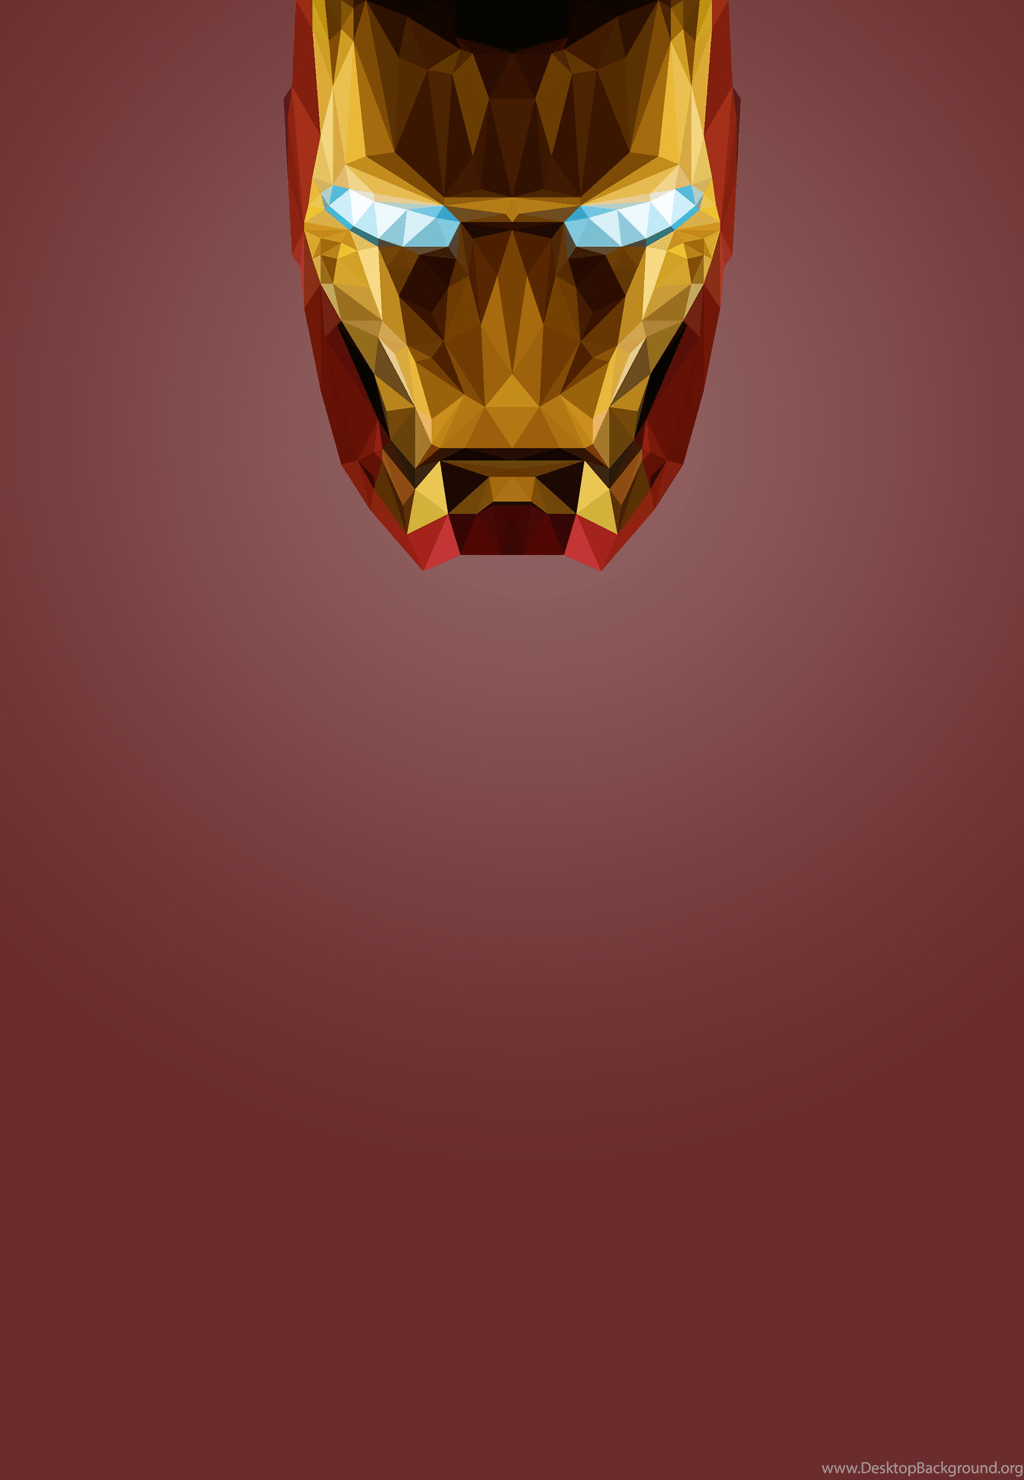 Low Poly Iron Man, Mobile Wallpaper, 2491 × 3600 Imgur Desktop